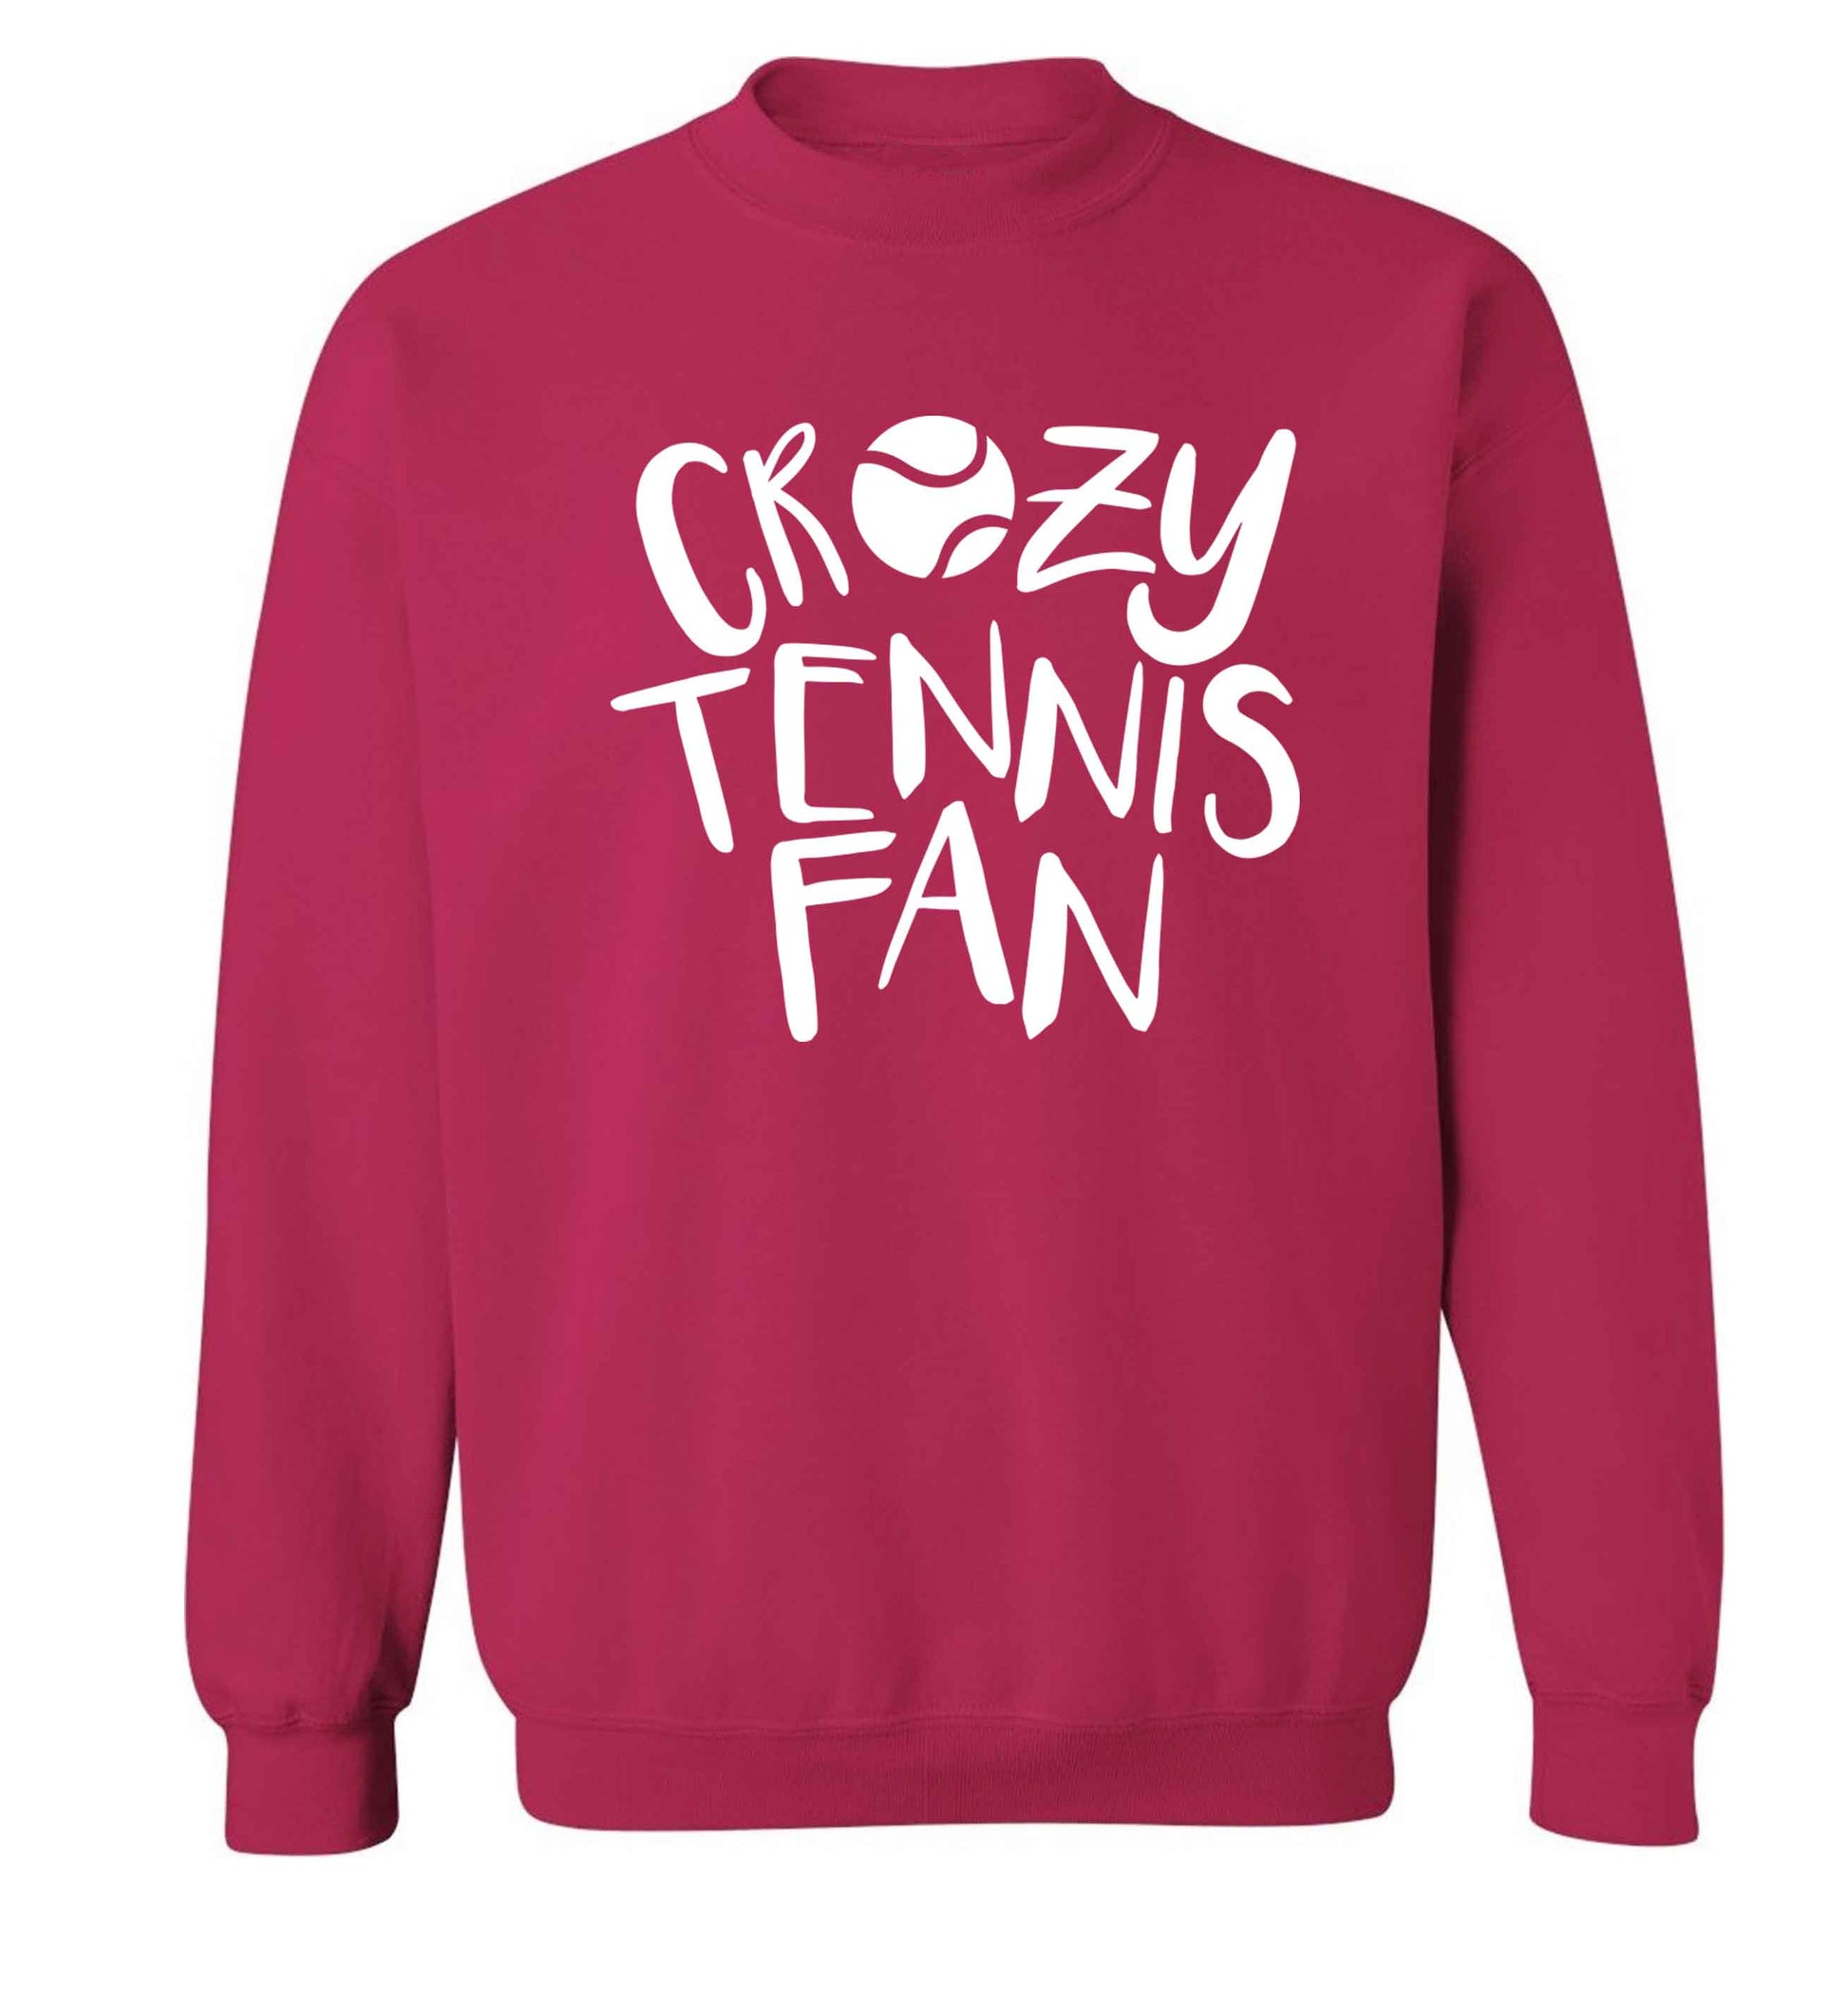 Crazy tennis fan Adult's unisex pink Sweater 2XL